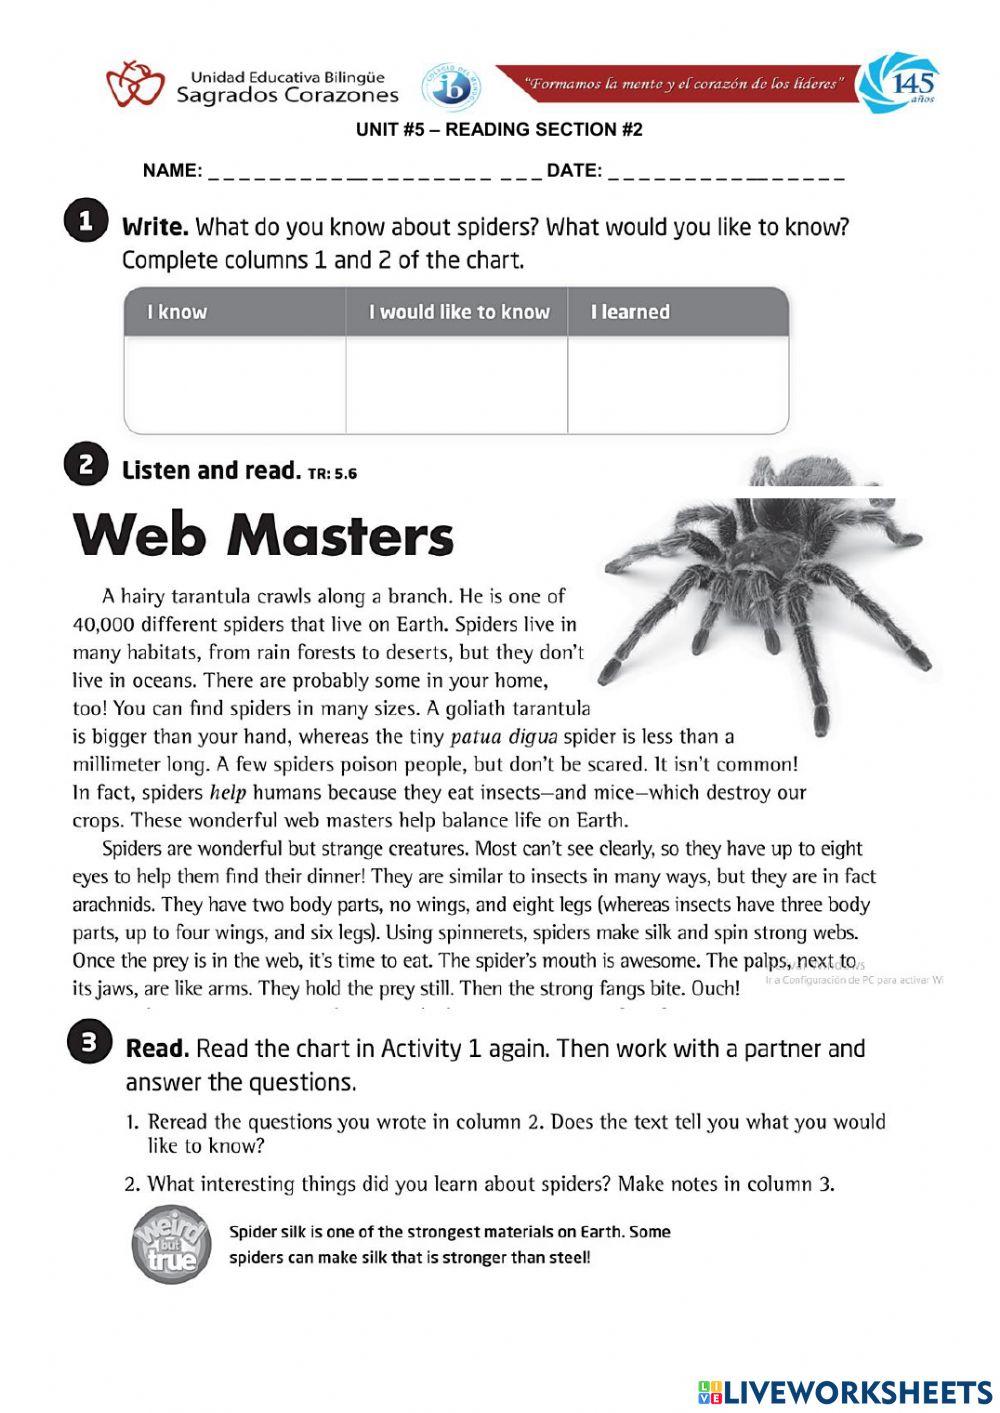 Web Masters